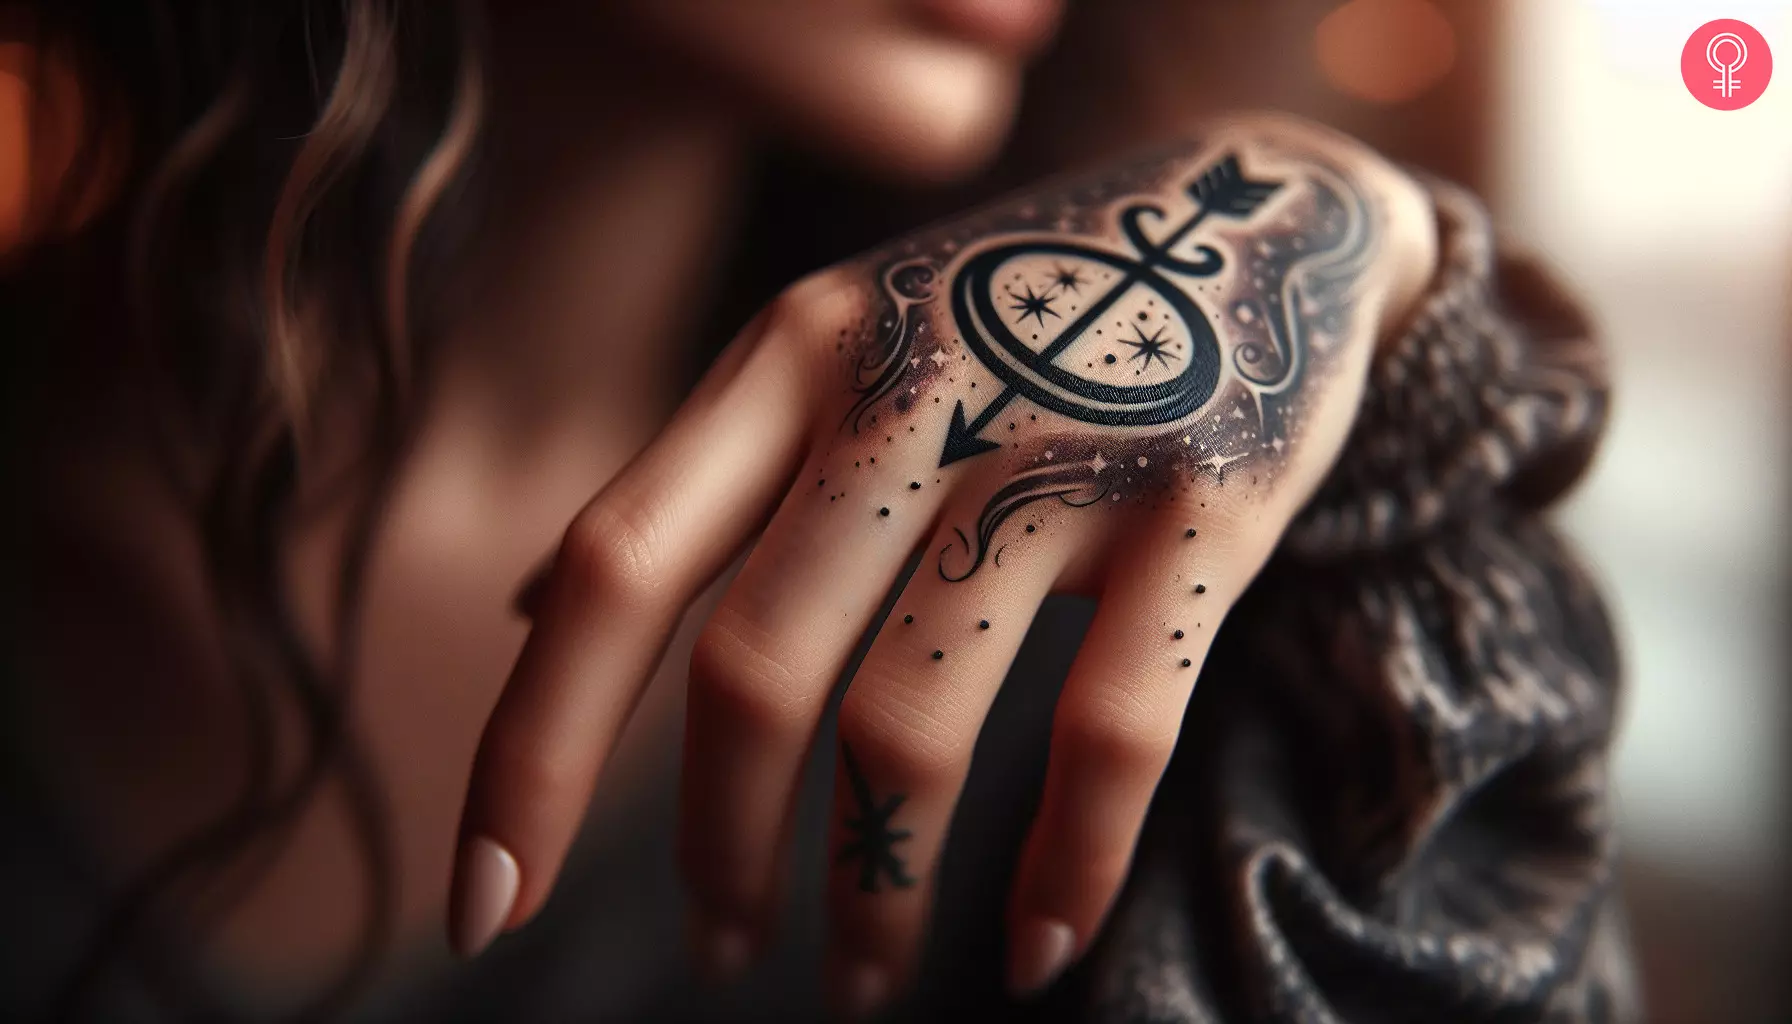 Arrow symbol Sagittarius tattoo on the hand of a woman